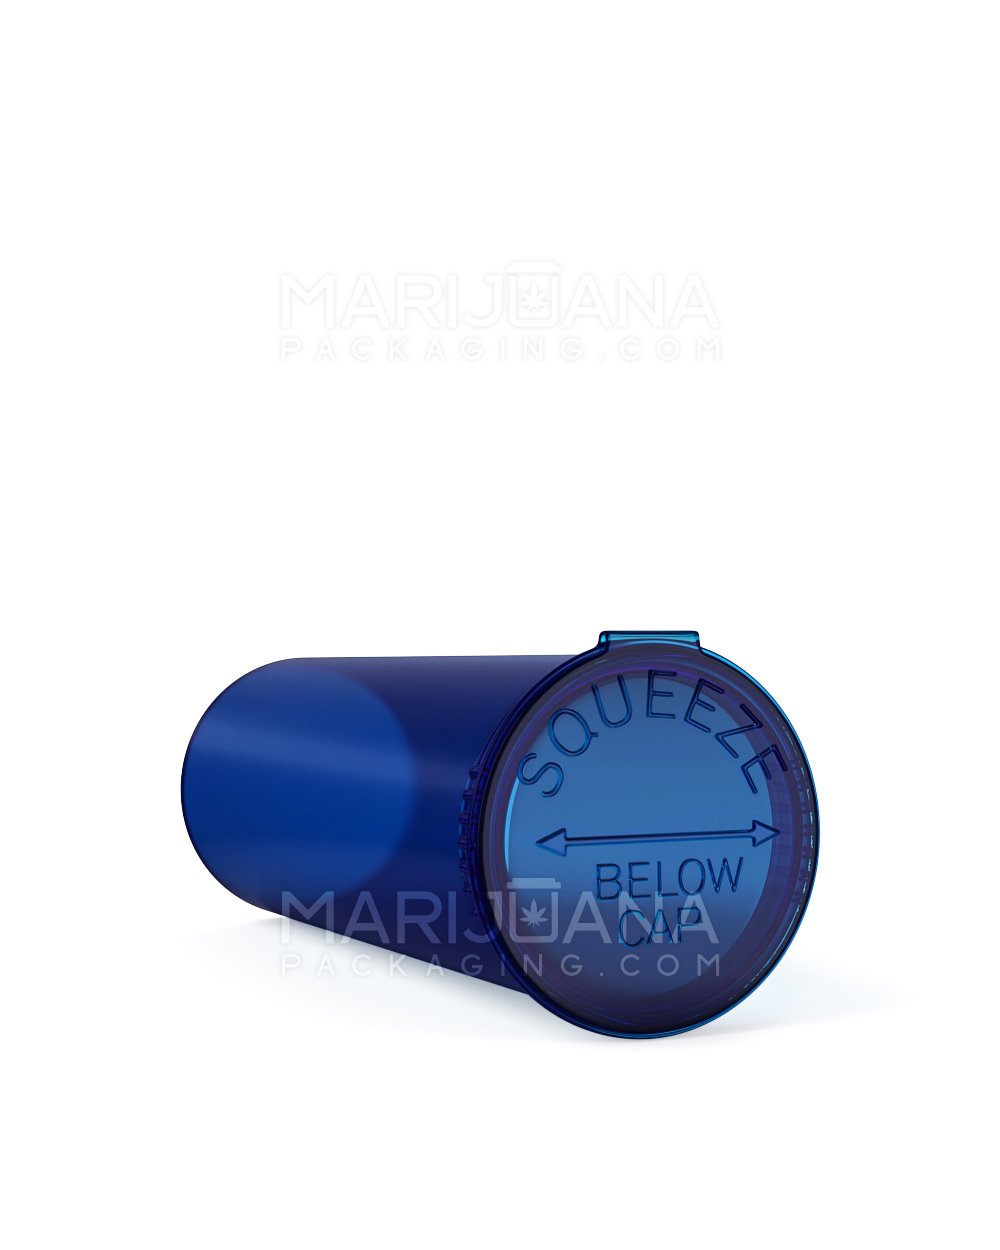 Child Resistant | Transparent Blue Pop Top Bottles | 60dr - 14g - 75 Count - 3